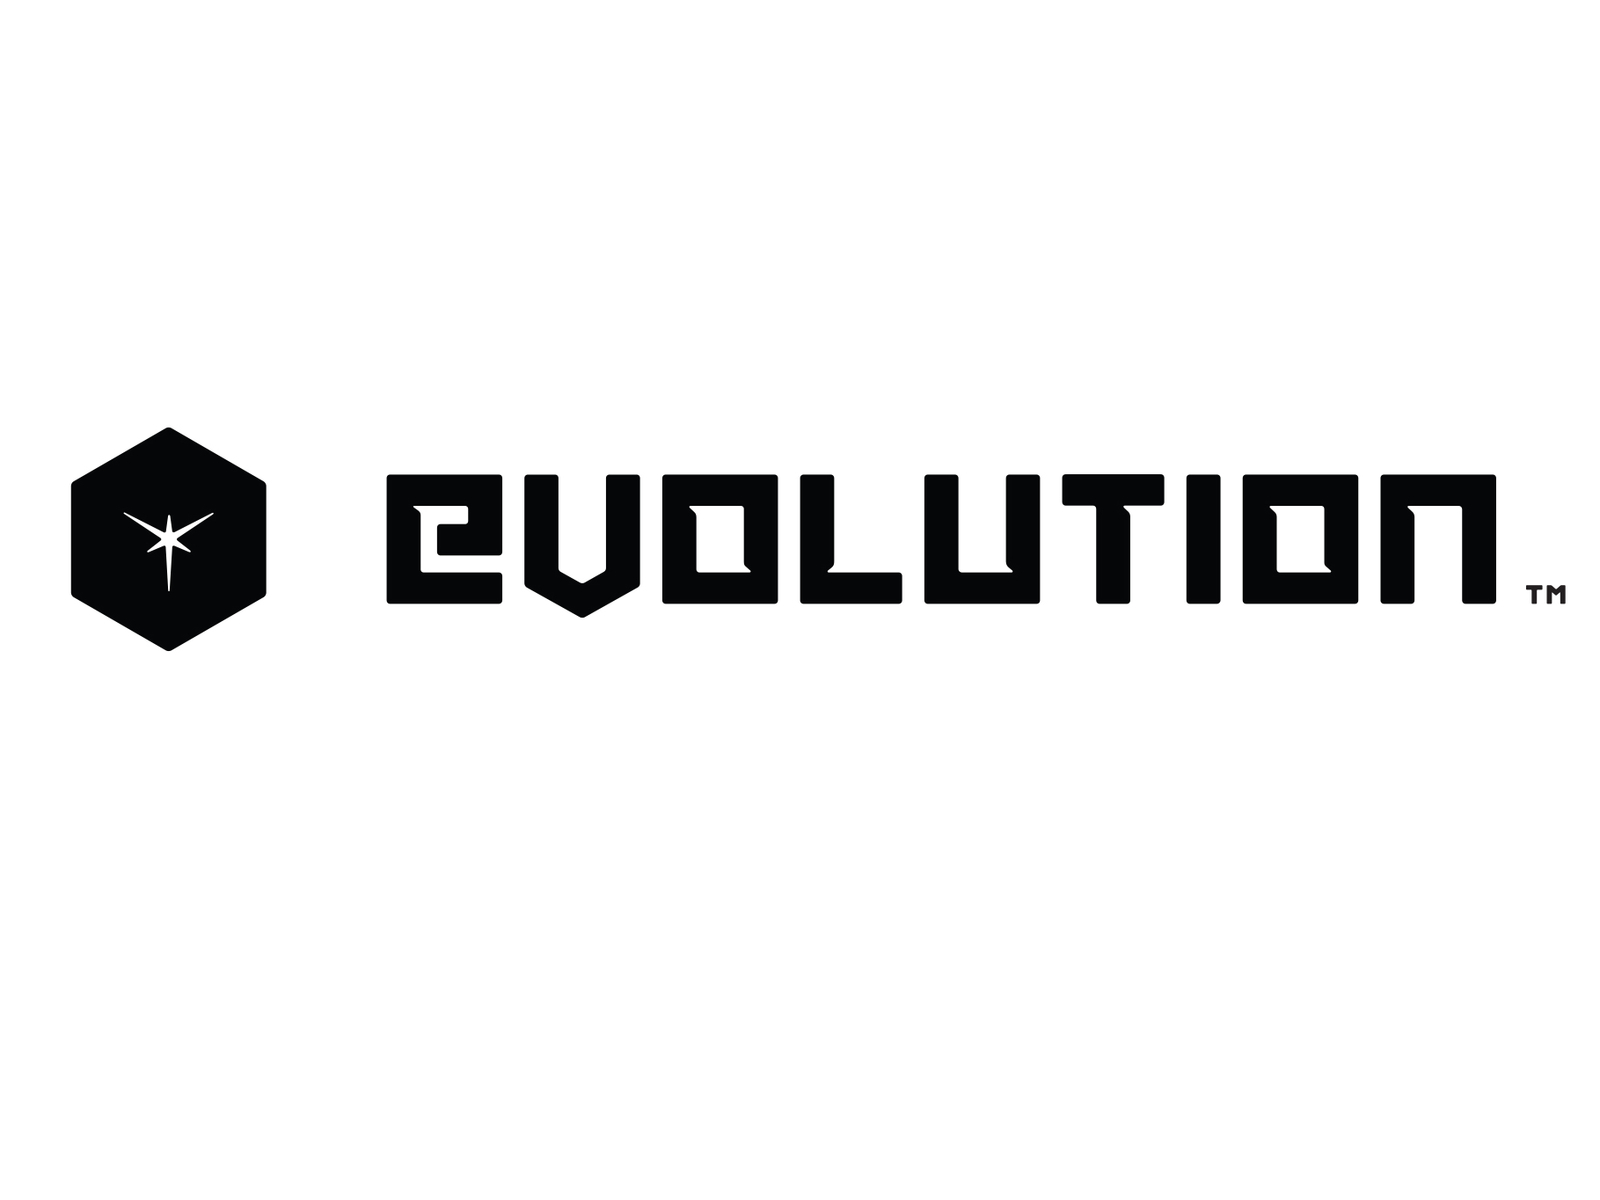 Evolution Logo Design by Breck Campbell on Dribbble